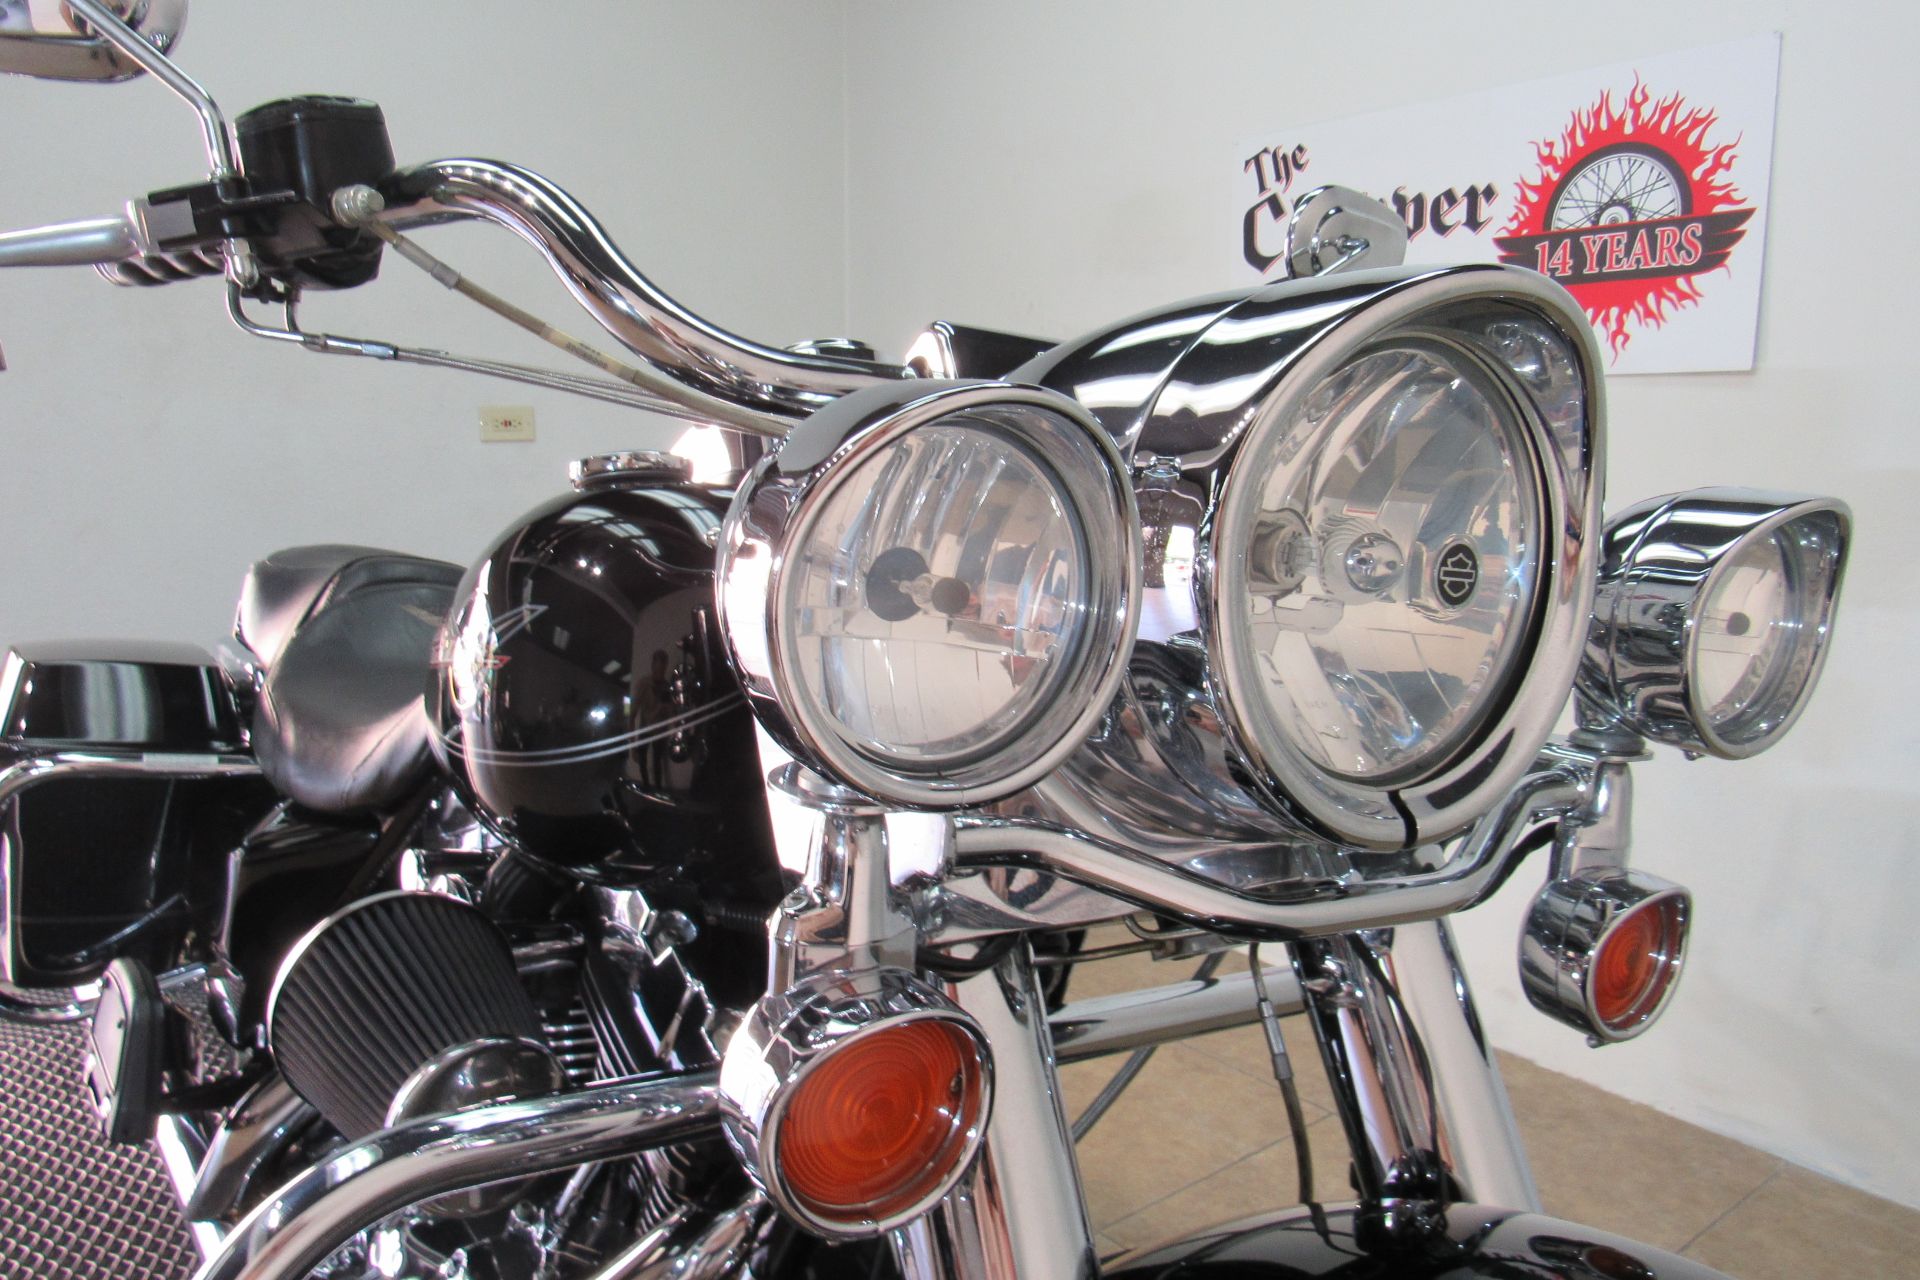 2007 Harley-Davidson Road King® in Temecula, California - Photo 18